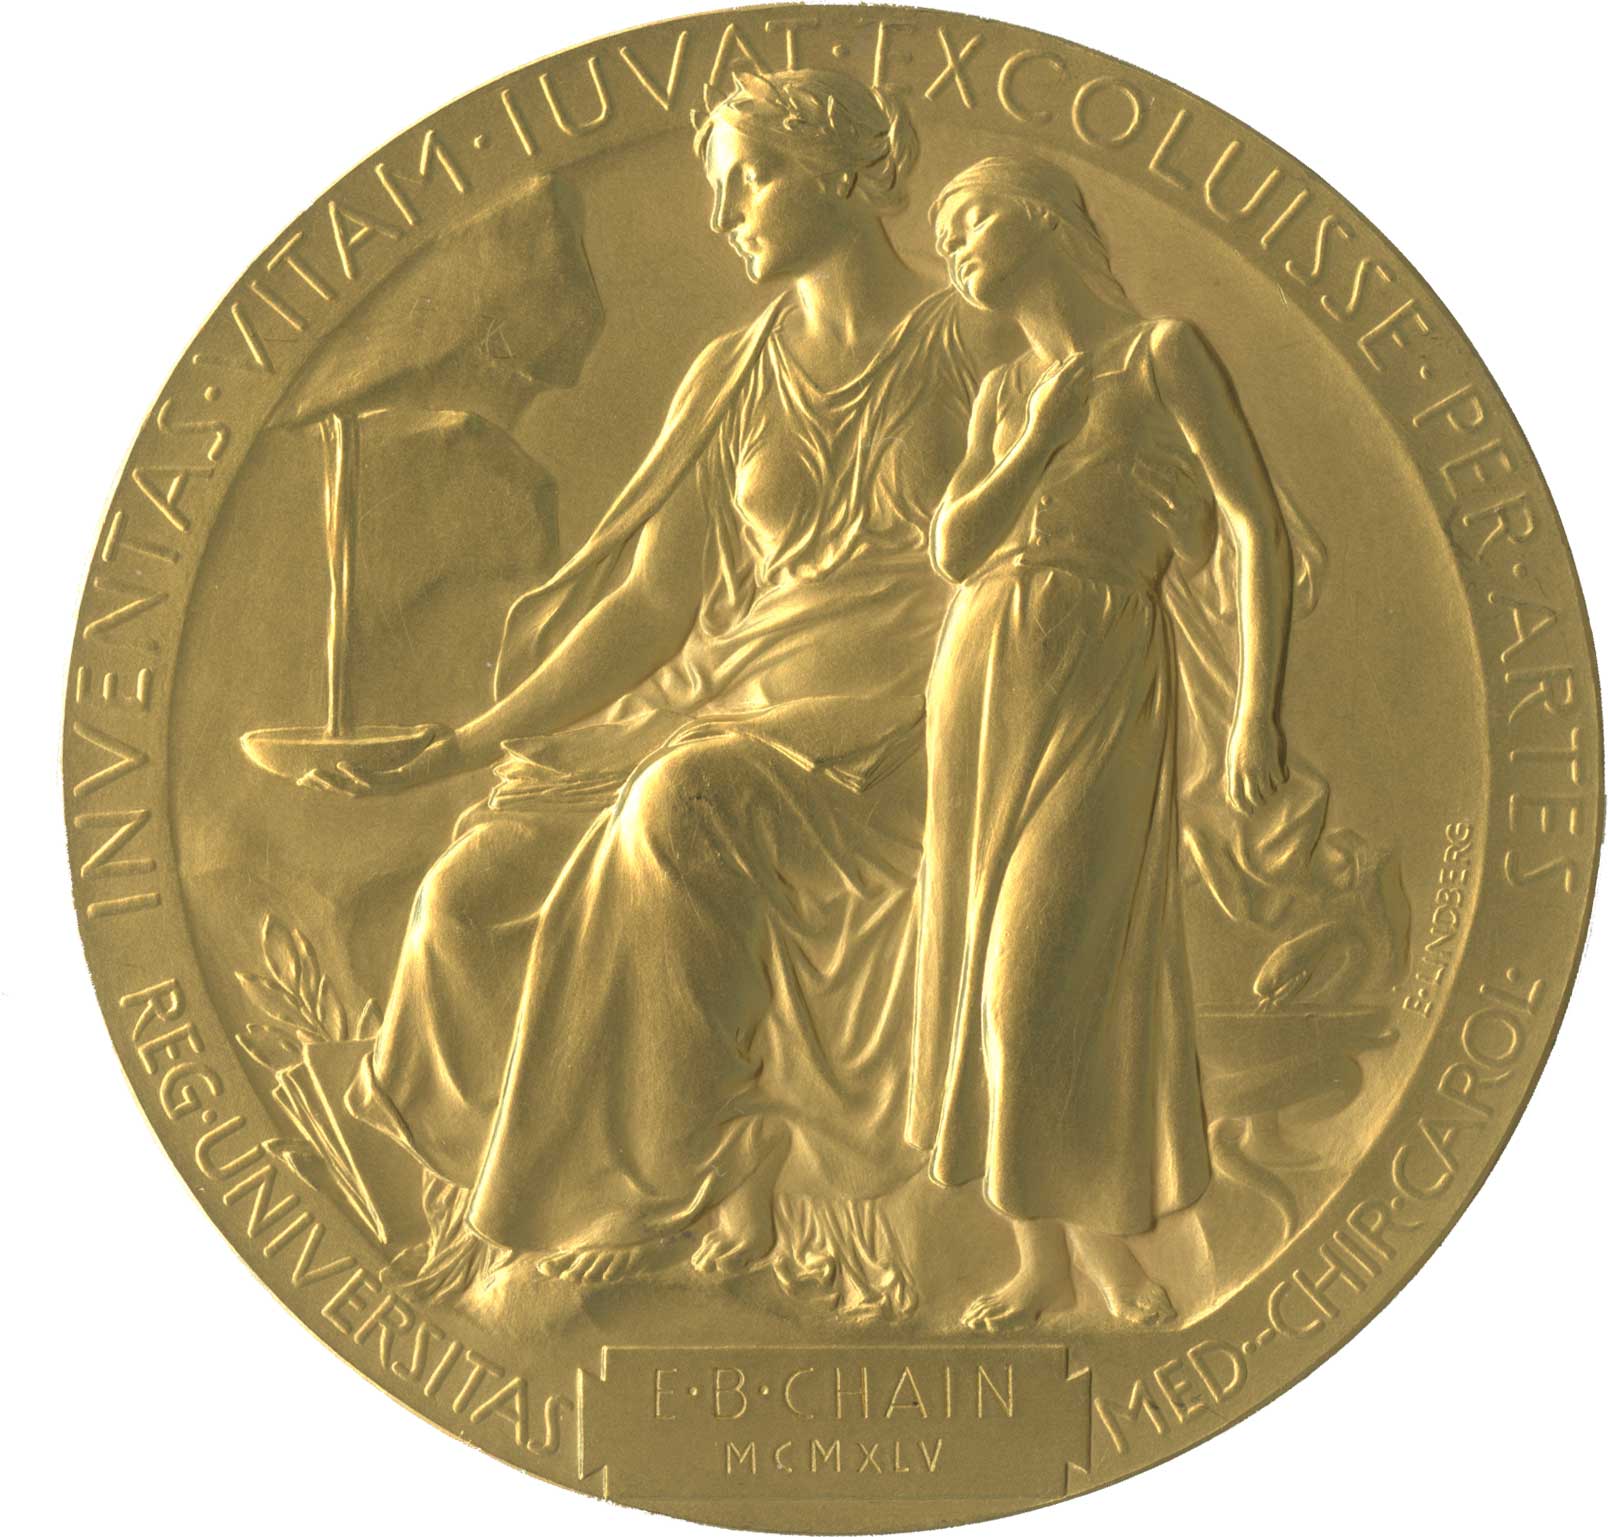 Ernst Chain's Nobel Prize medallion, reverse